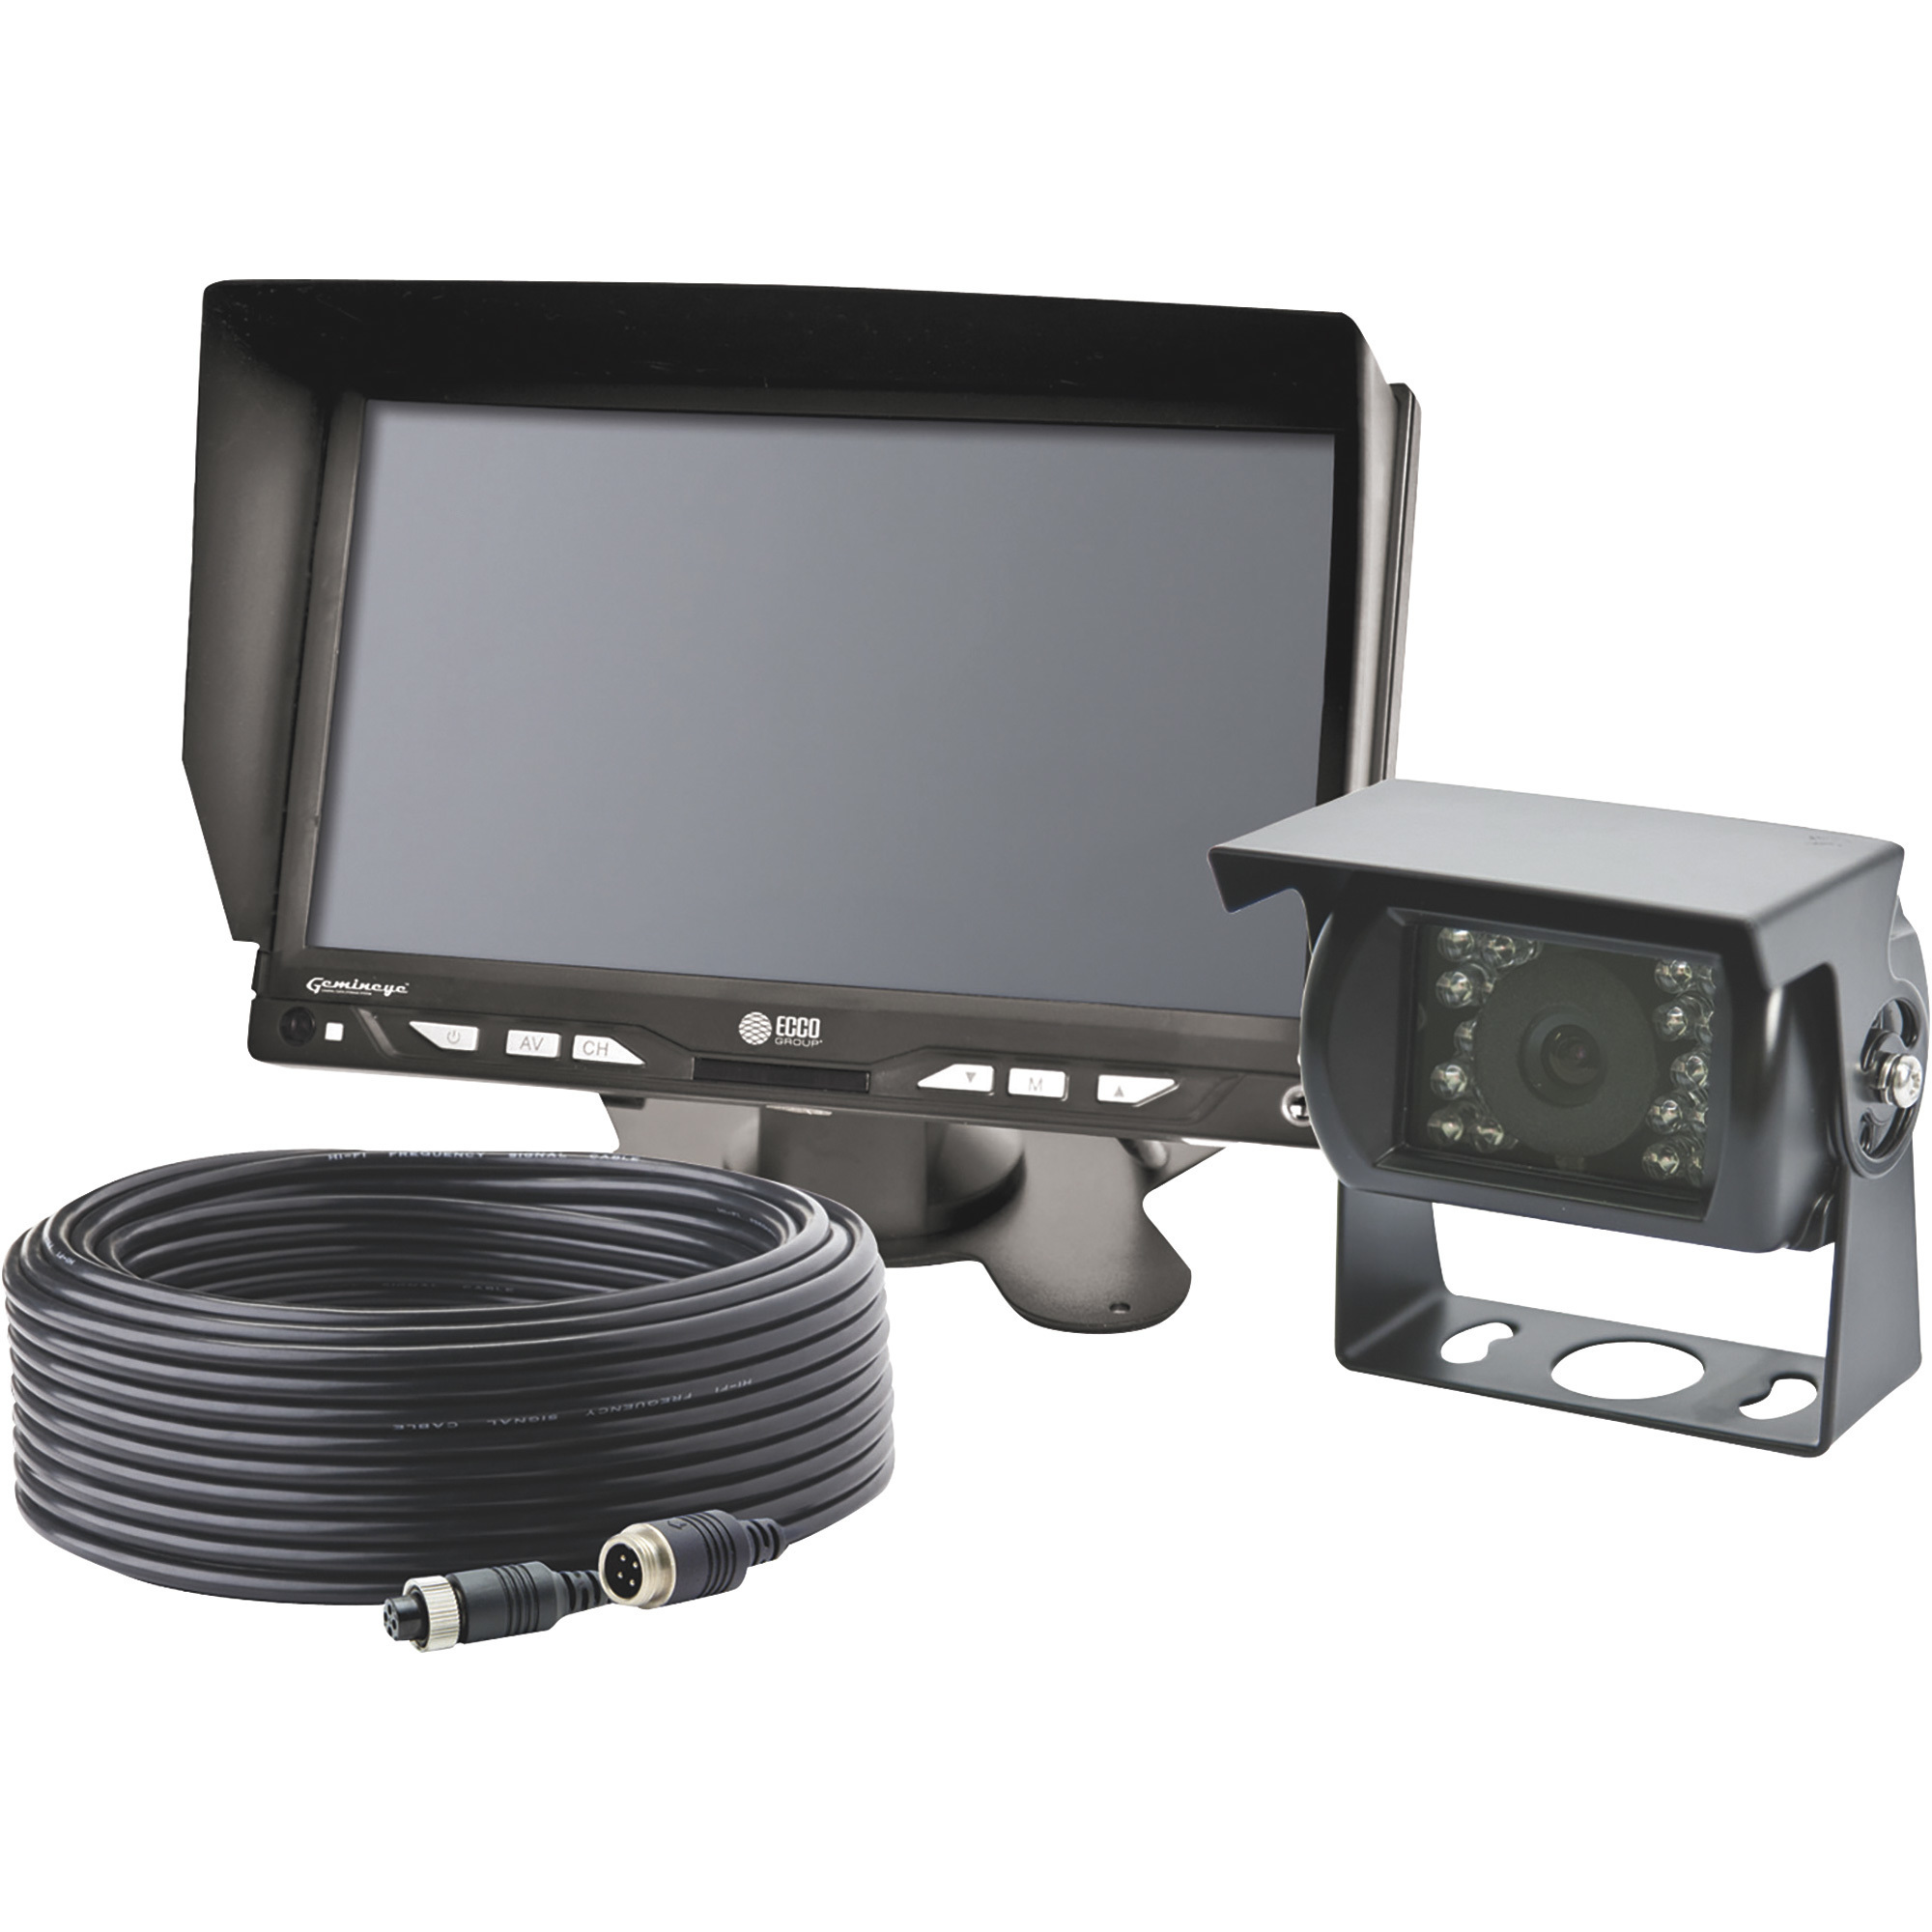 ECCO Remote Control Backup Camera System â 7Inch Color Monitor, Infrared Color Camera, Model K7000B